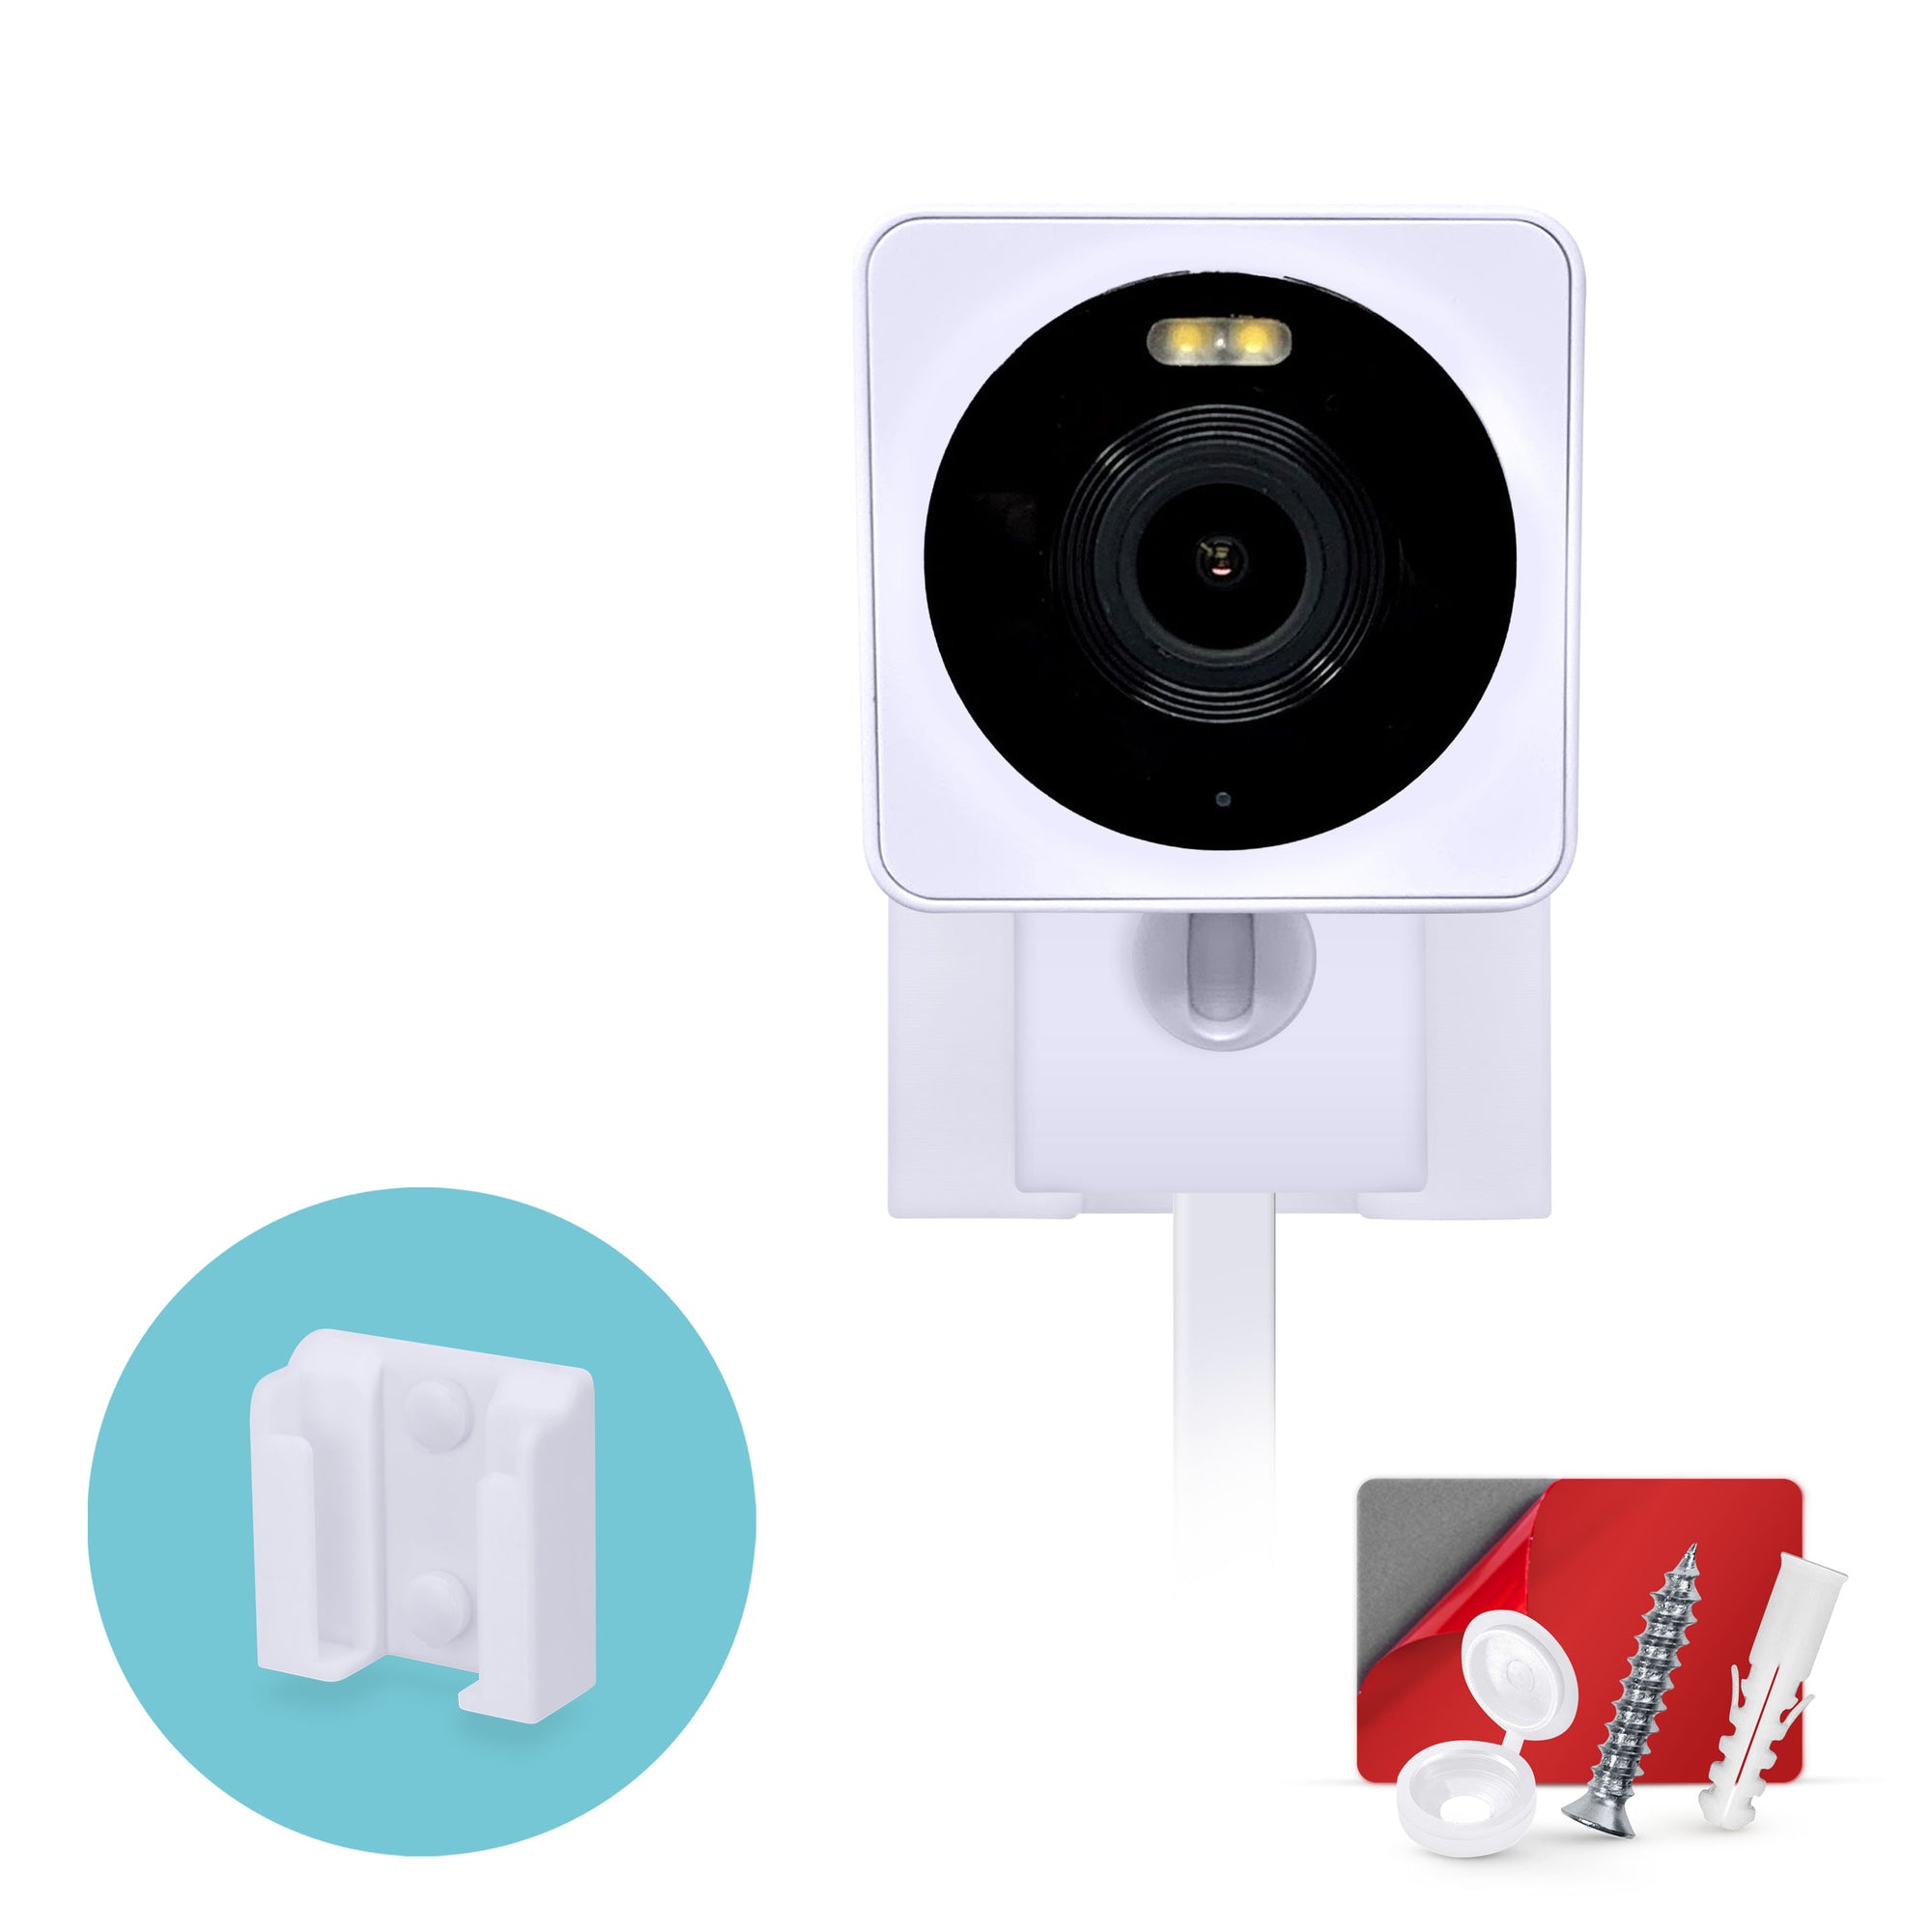 Wall Mount for WYZE Cam OG Indoor/Outdoor 1080p Wi-Fi Camera, Security Camera Holder Bracket, Reduce Blind Spots & Clutter